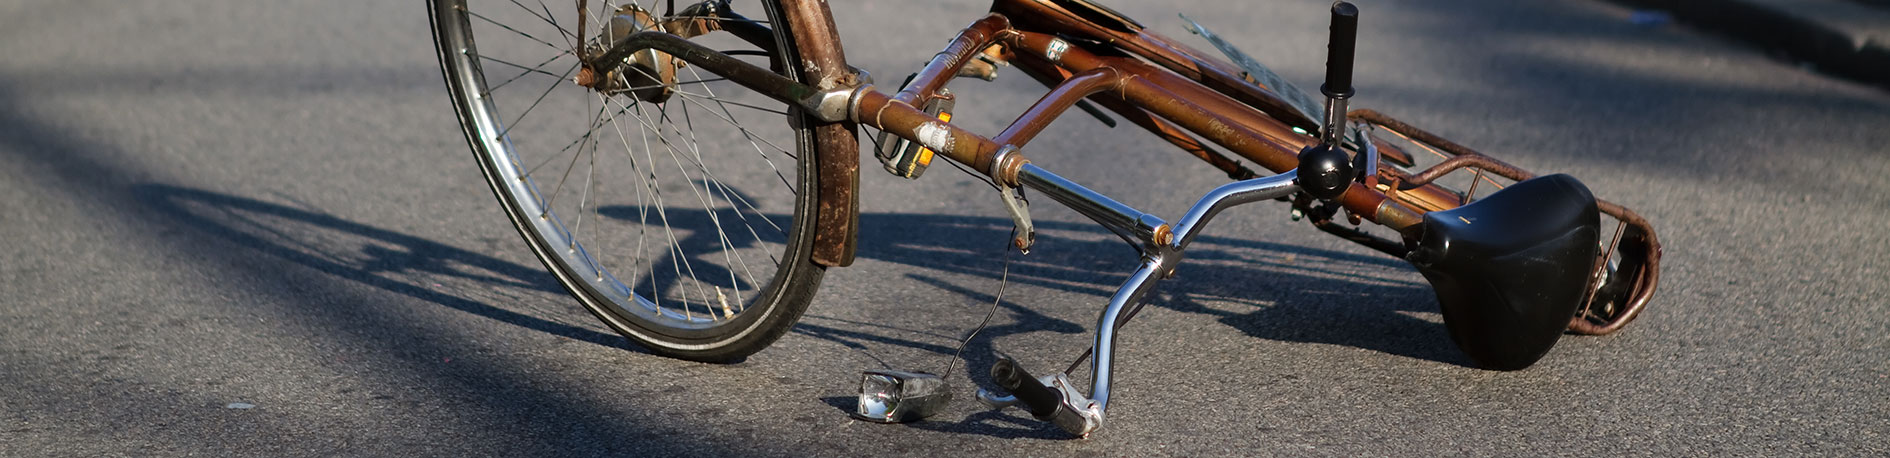 Vaker ernstig letsel op e-bike | LetselPro